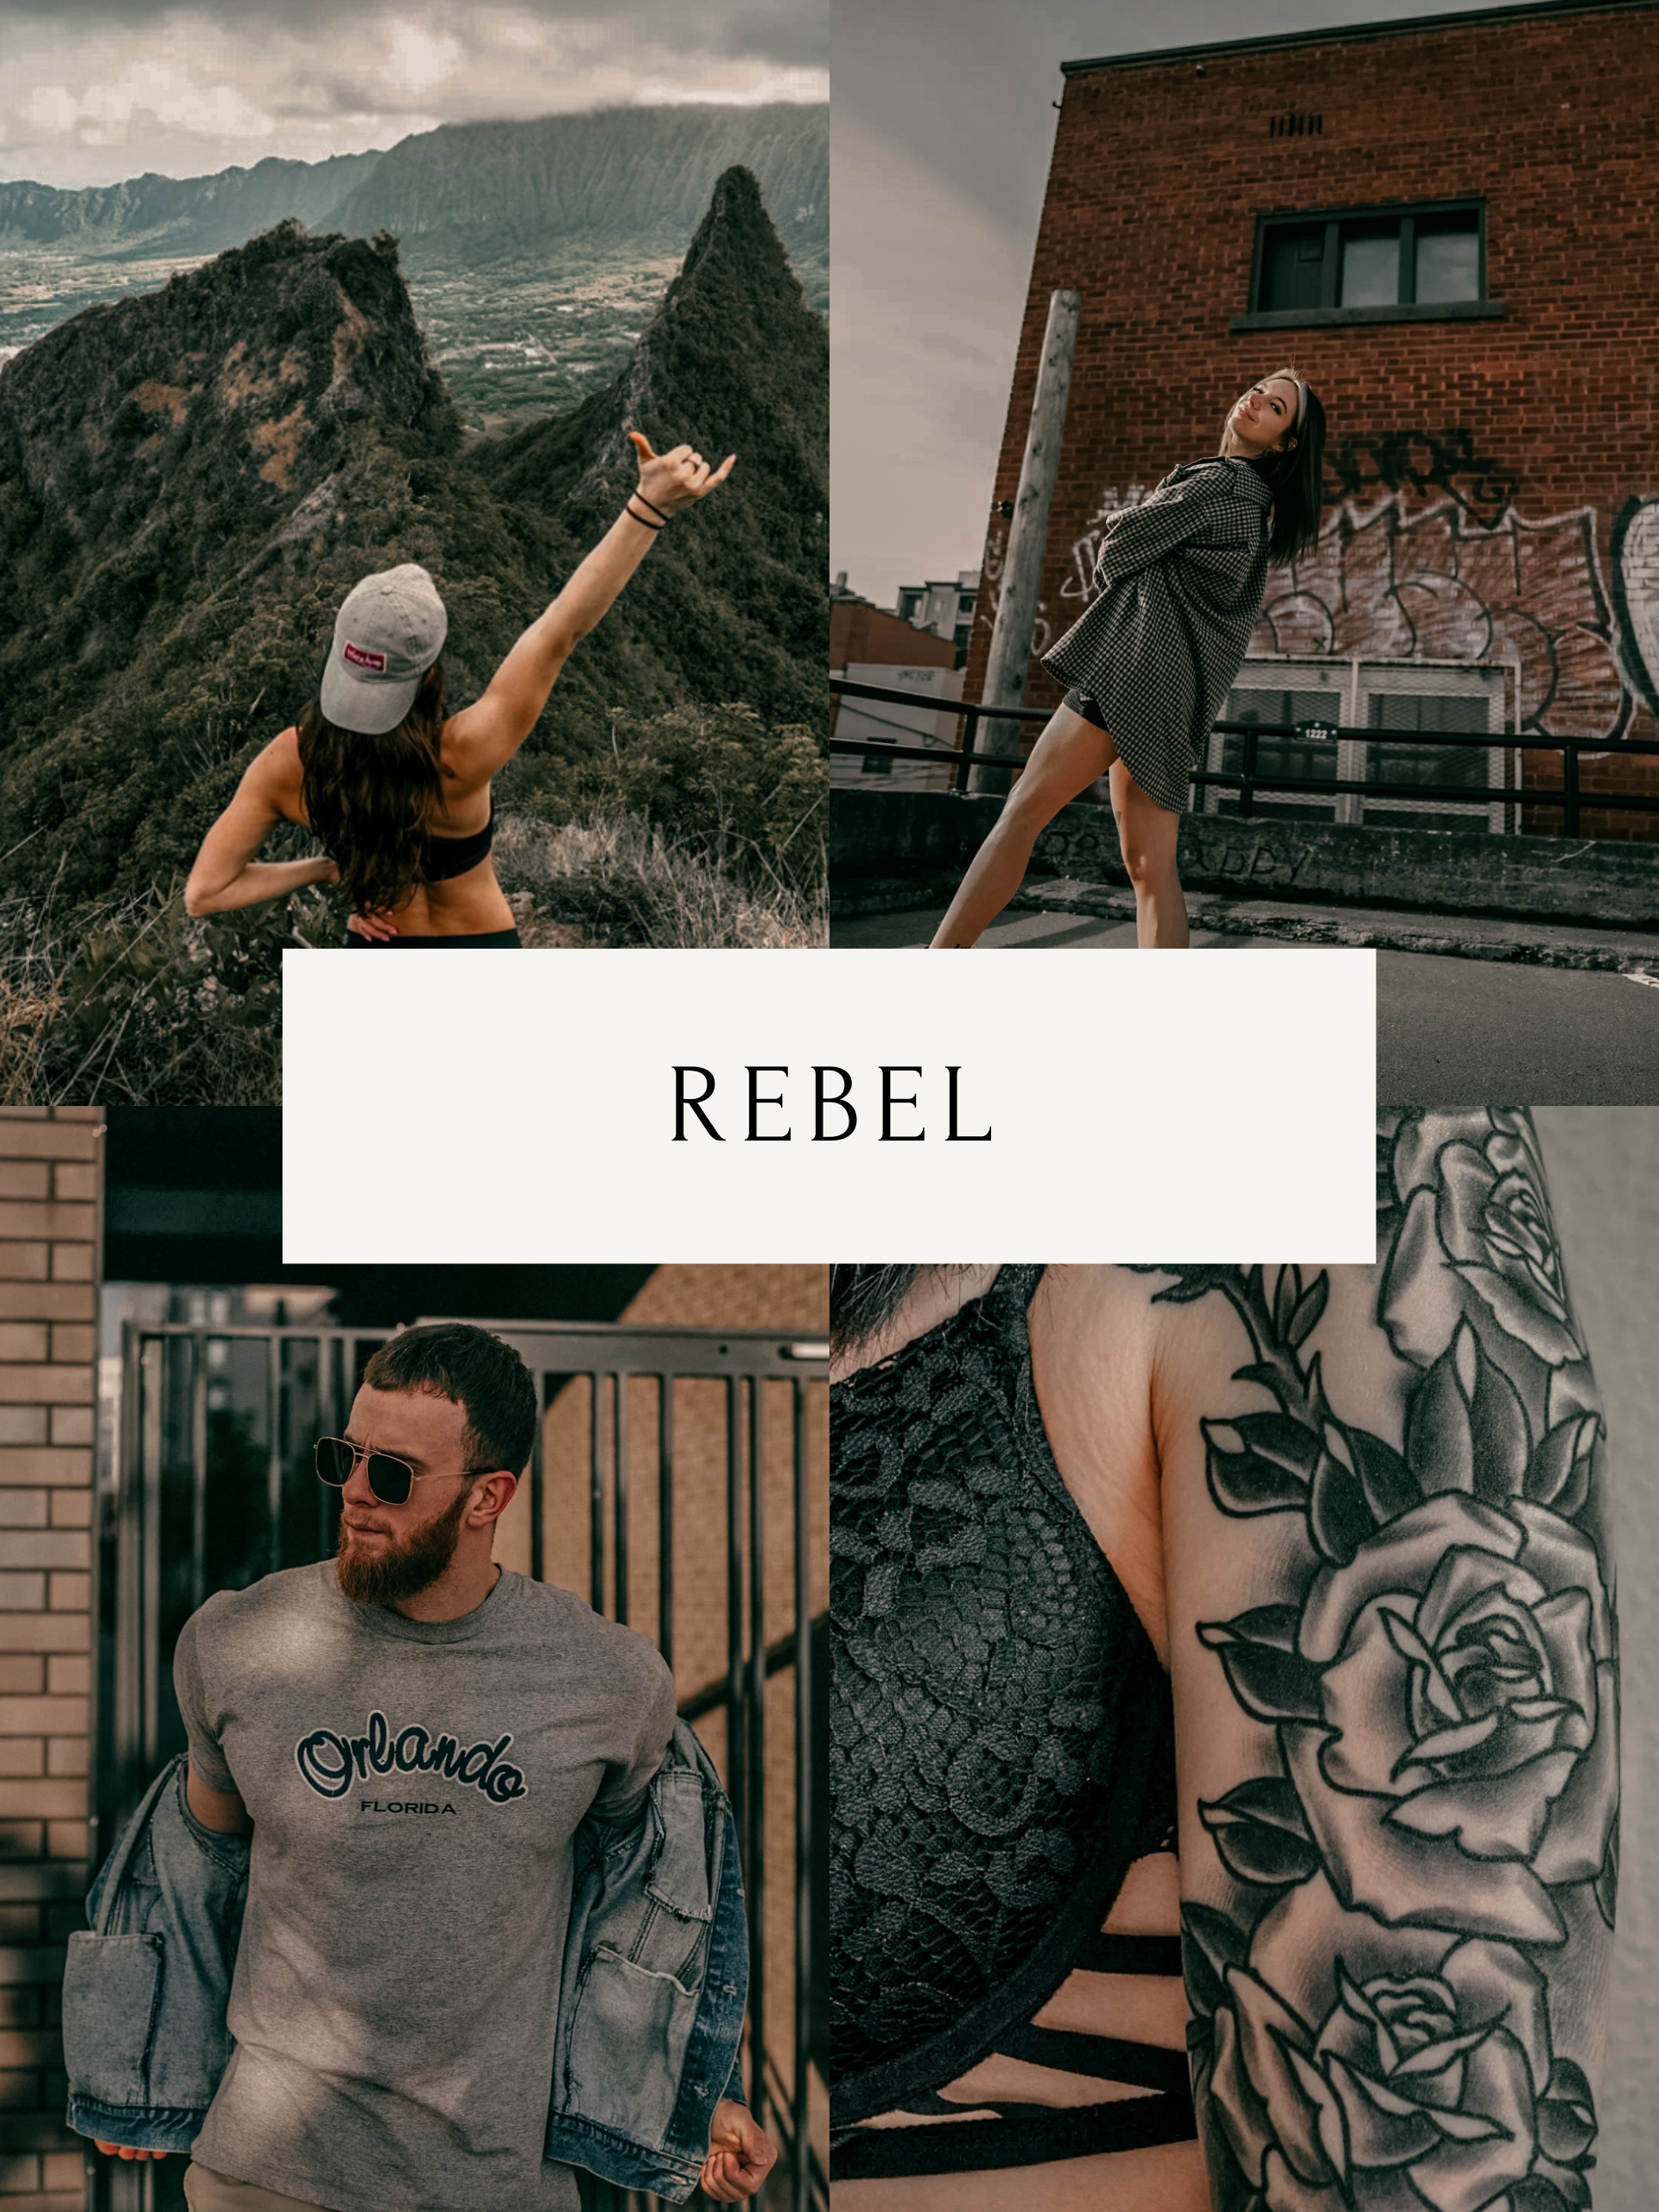 Rebel - One Click Filter